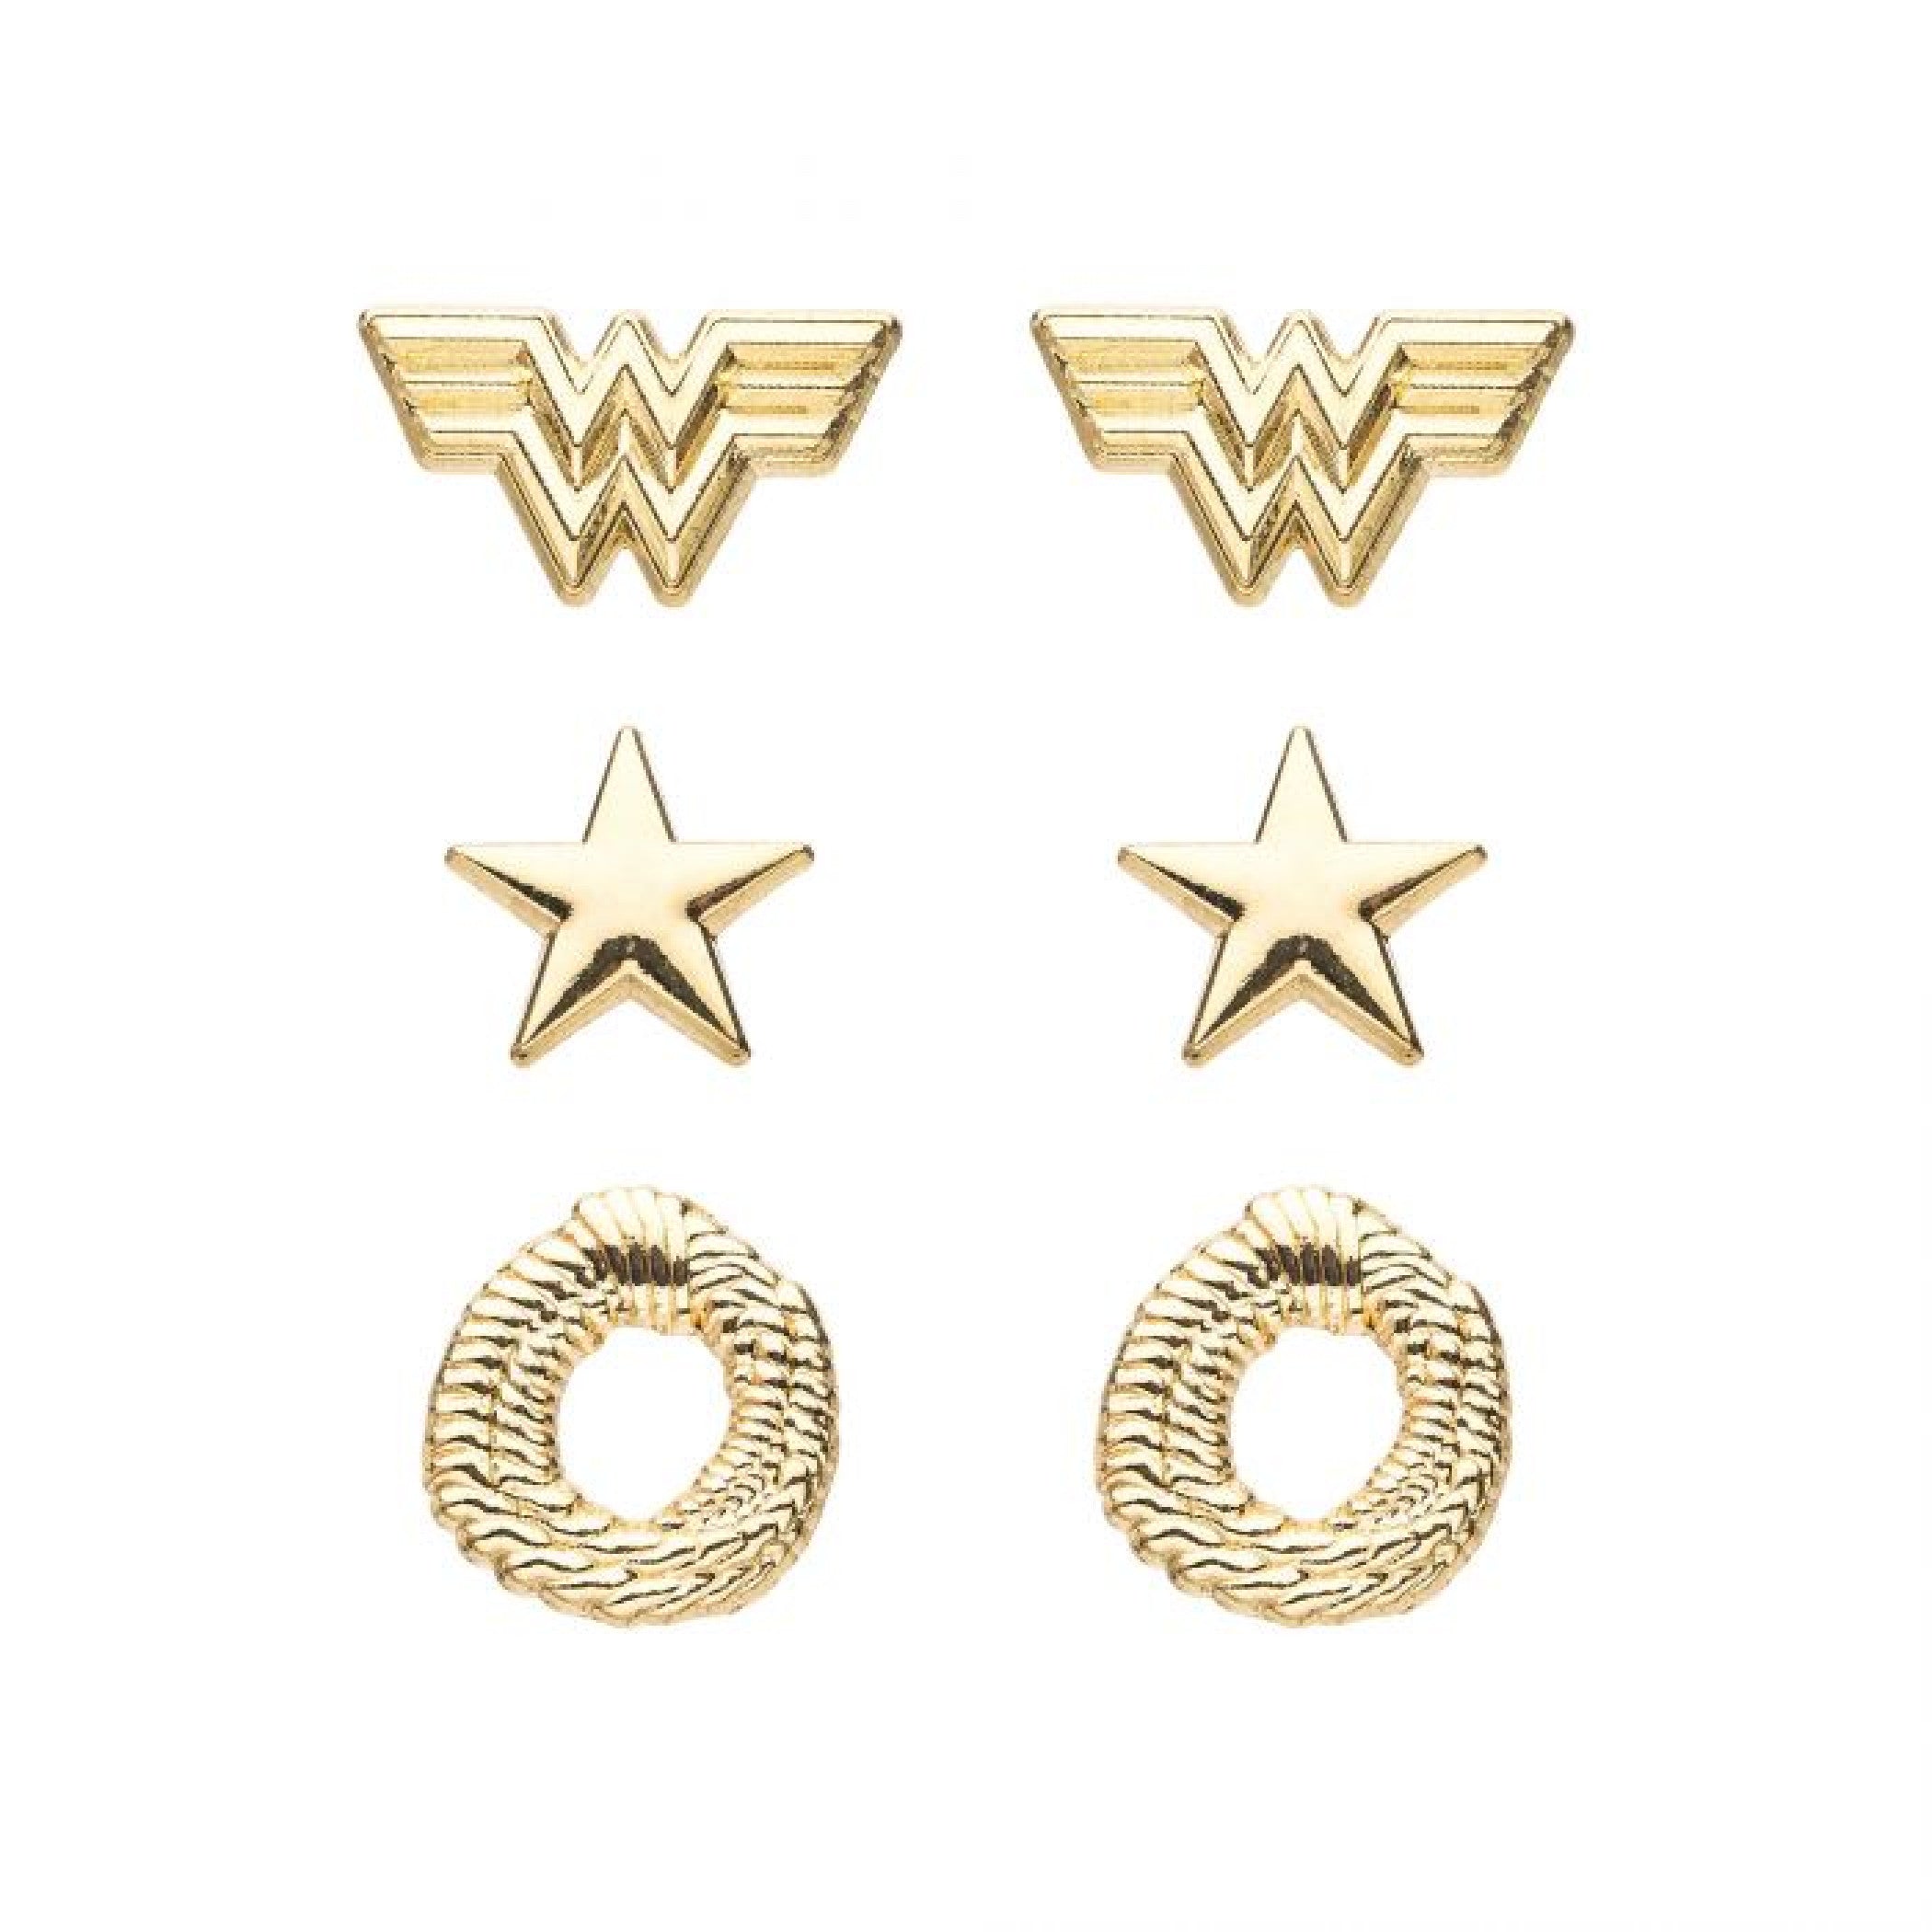 DC Comics Wonder Woman 1984 Stainless Steel Earrings Set